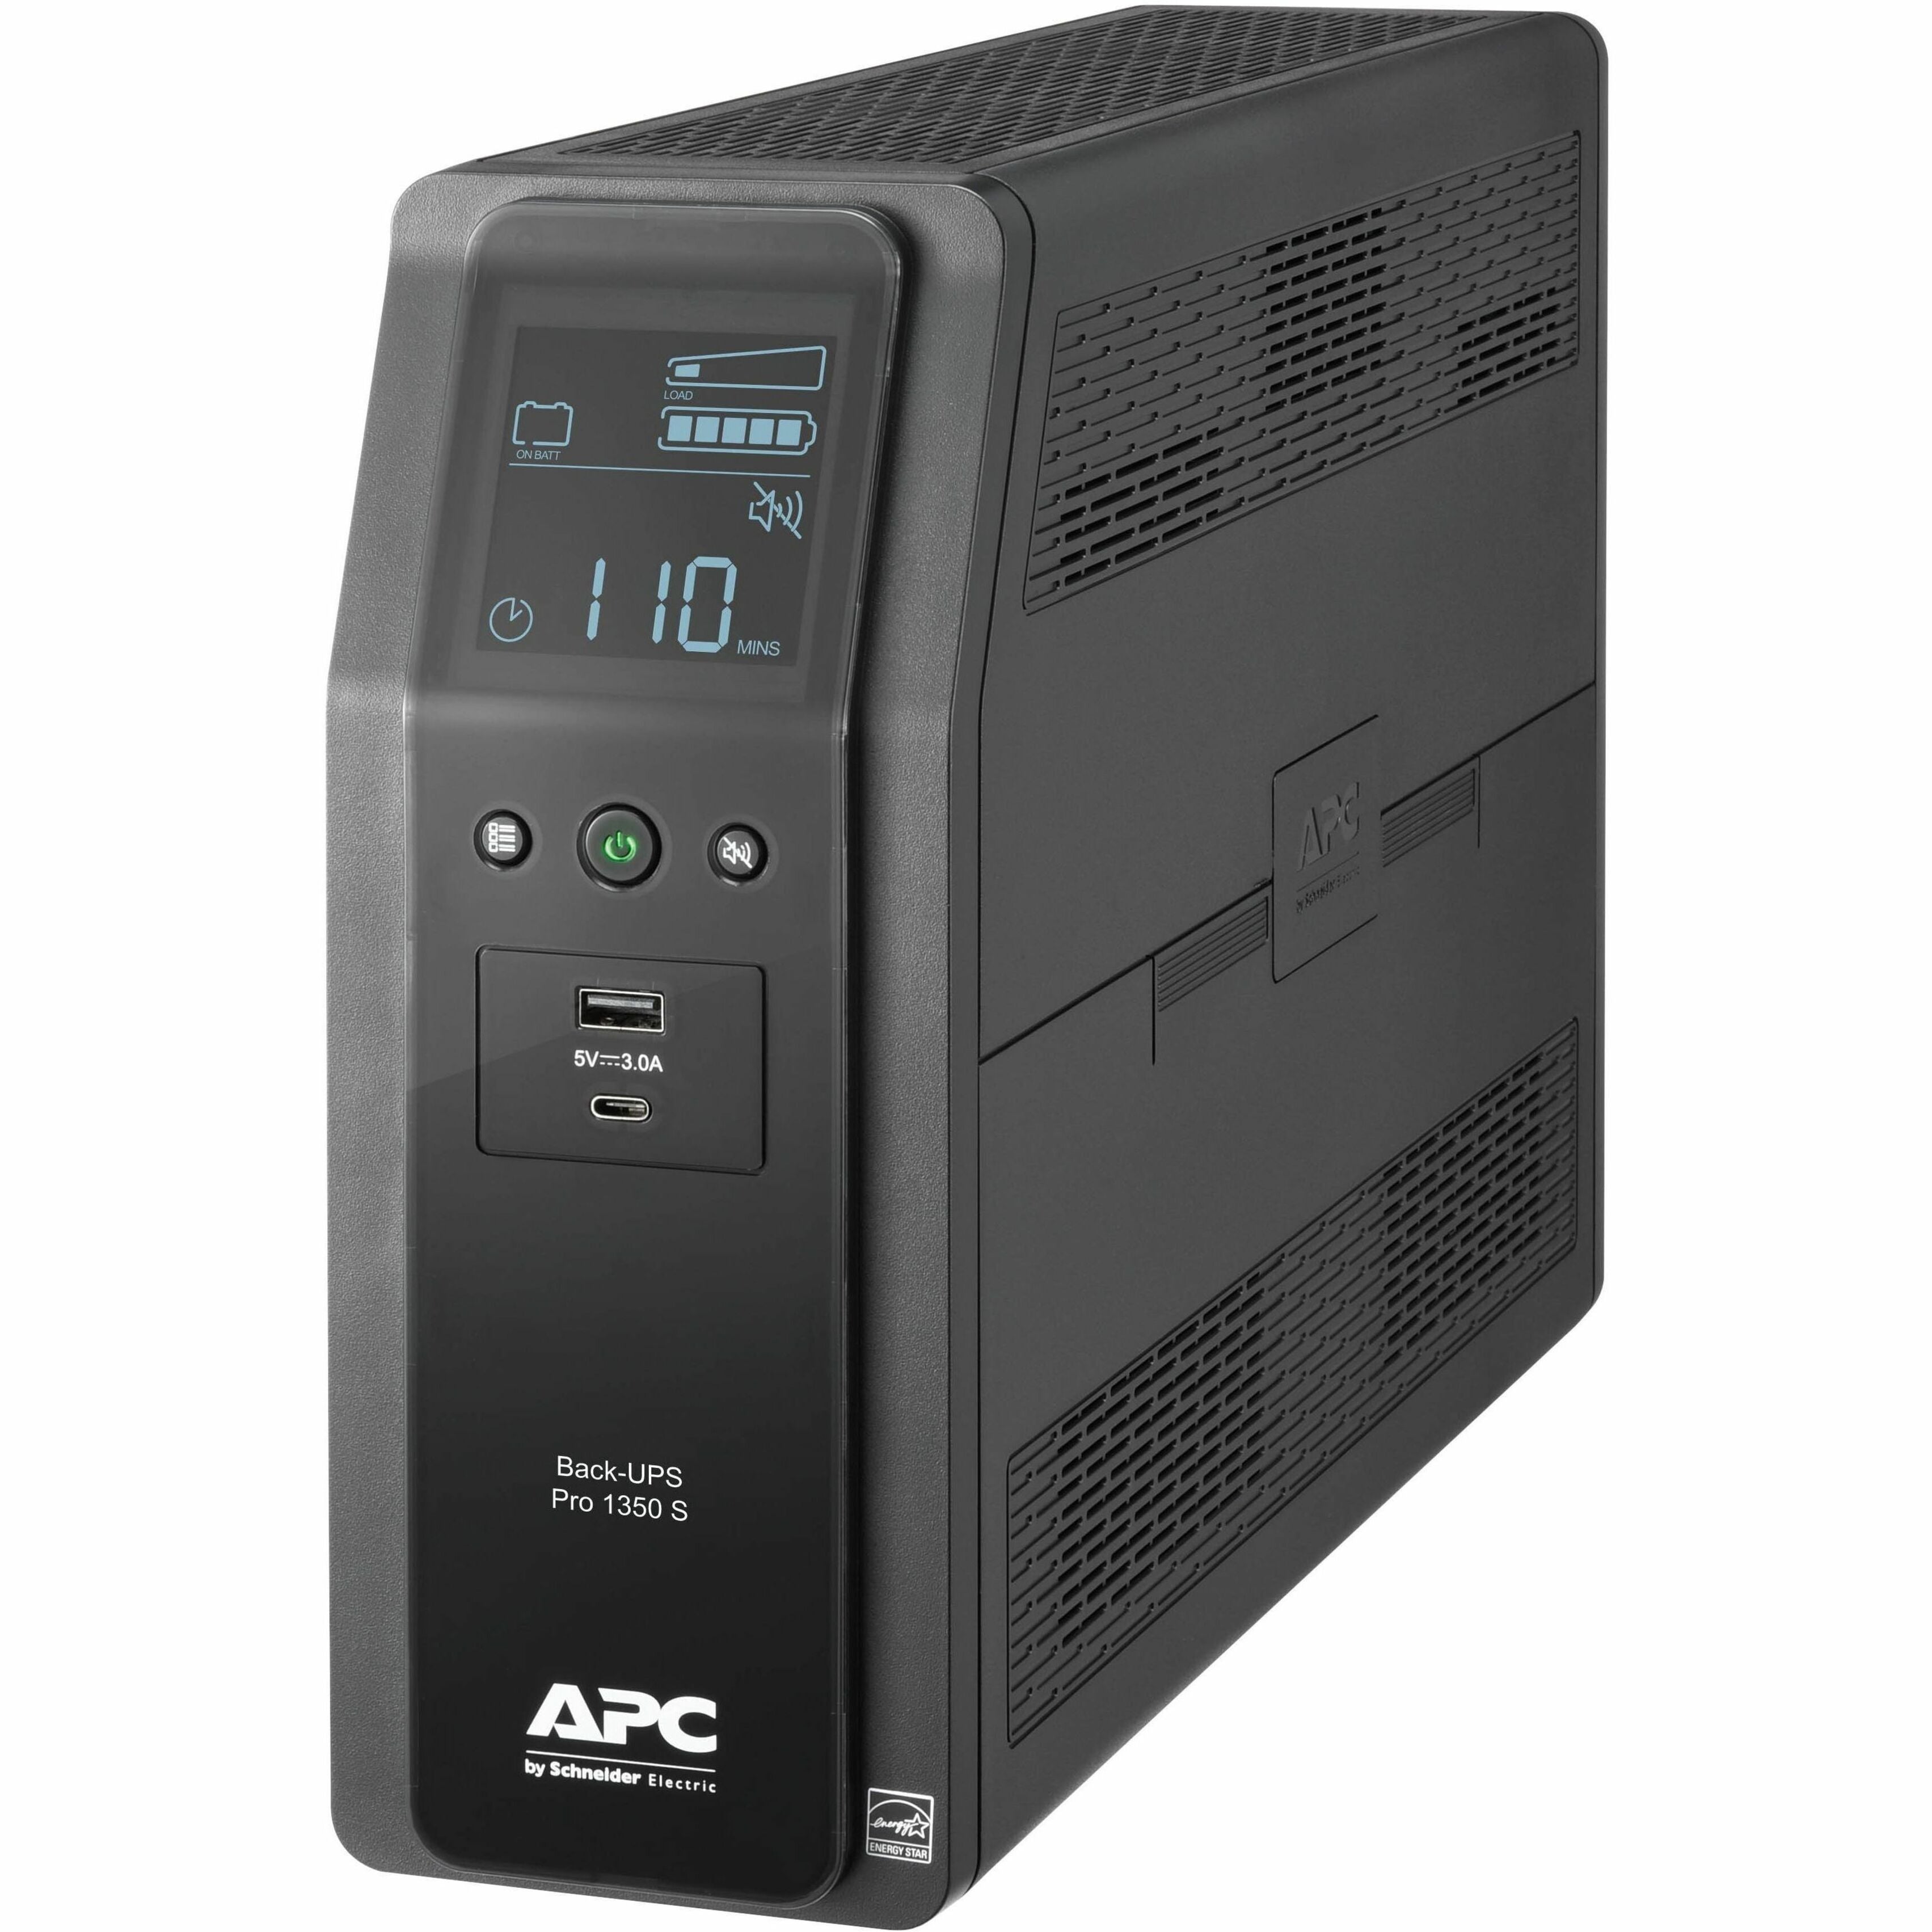 APC BR1350MS Back-UPS Pro Tower UPS、1350VA / 810W、3年間保証、Energy Star、RoHS認定 品：APC ブランド名：APC